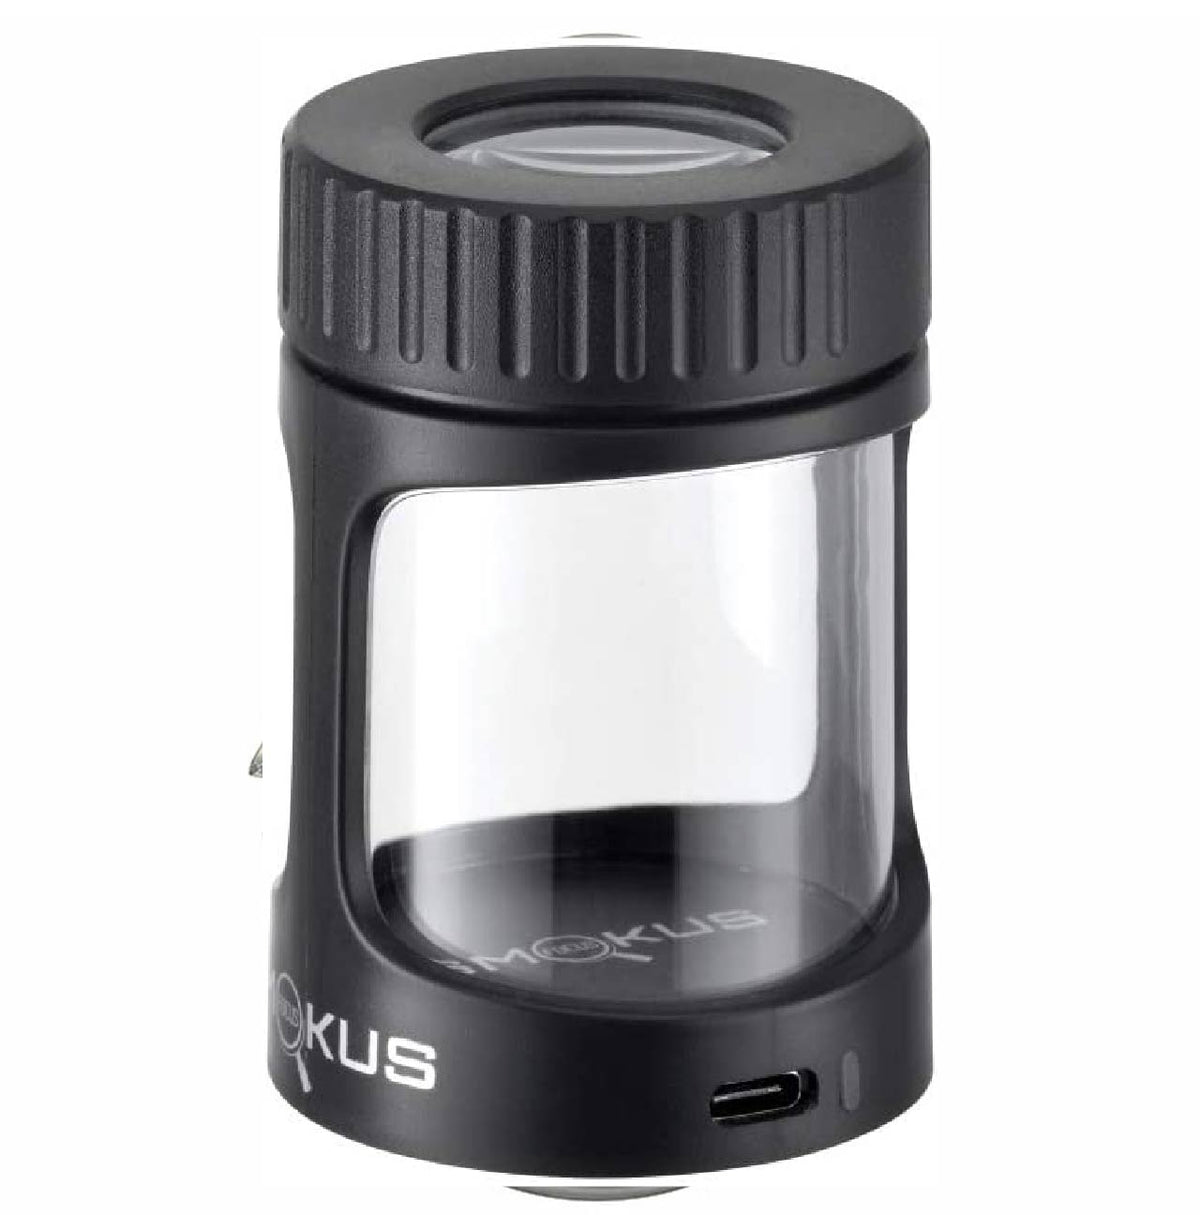 Magnifying Jar with LED Light Smokus Focus